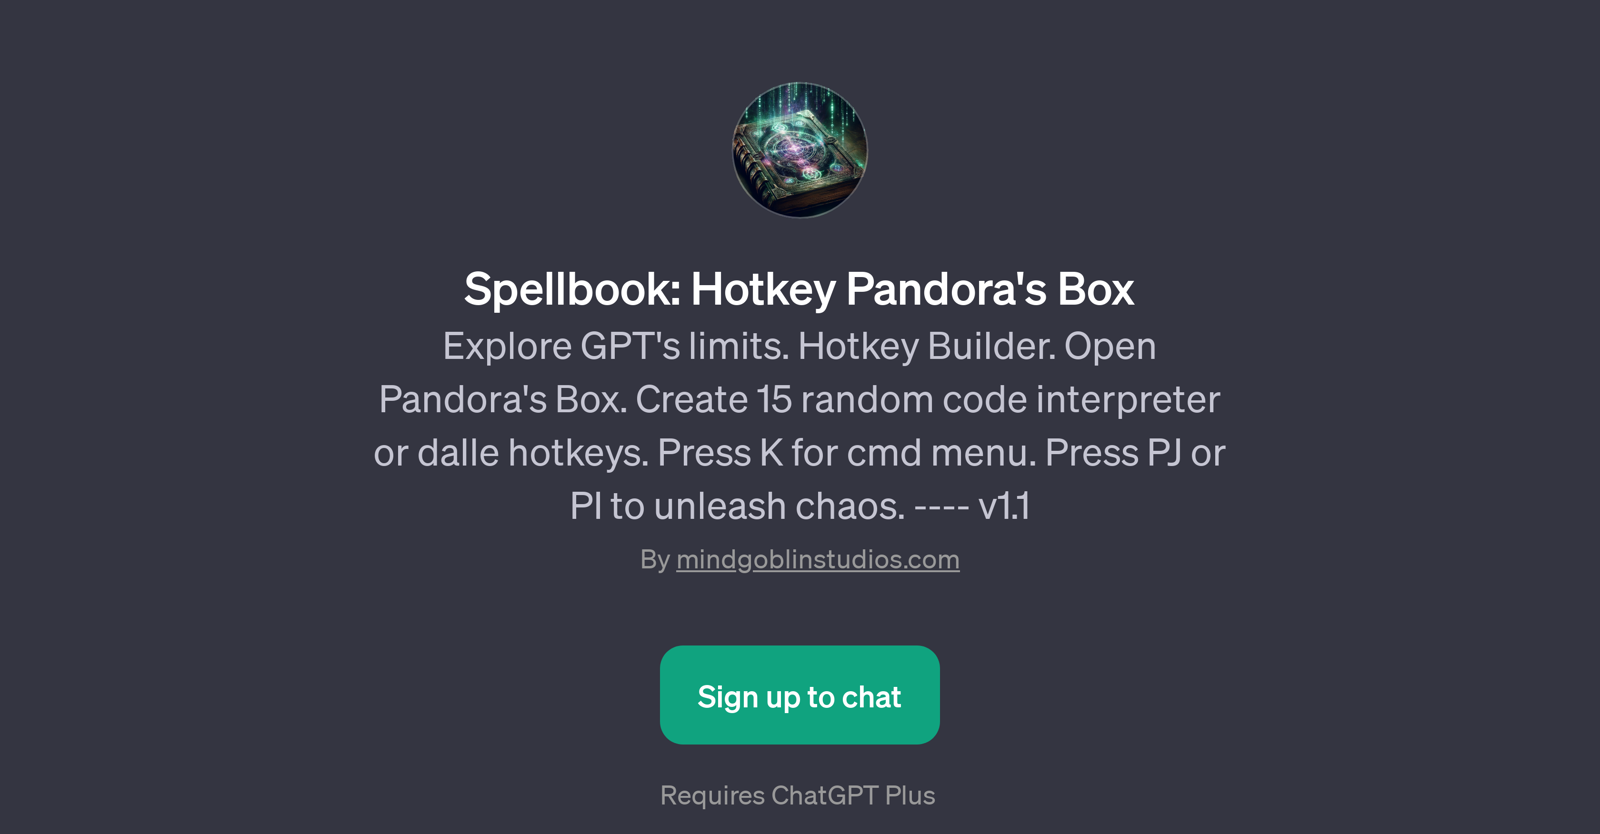 Spellbook: Hotkey Pandora's Box website